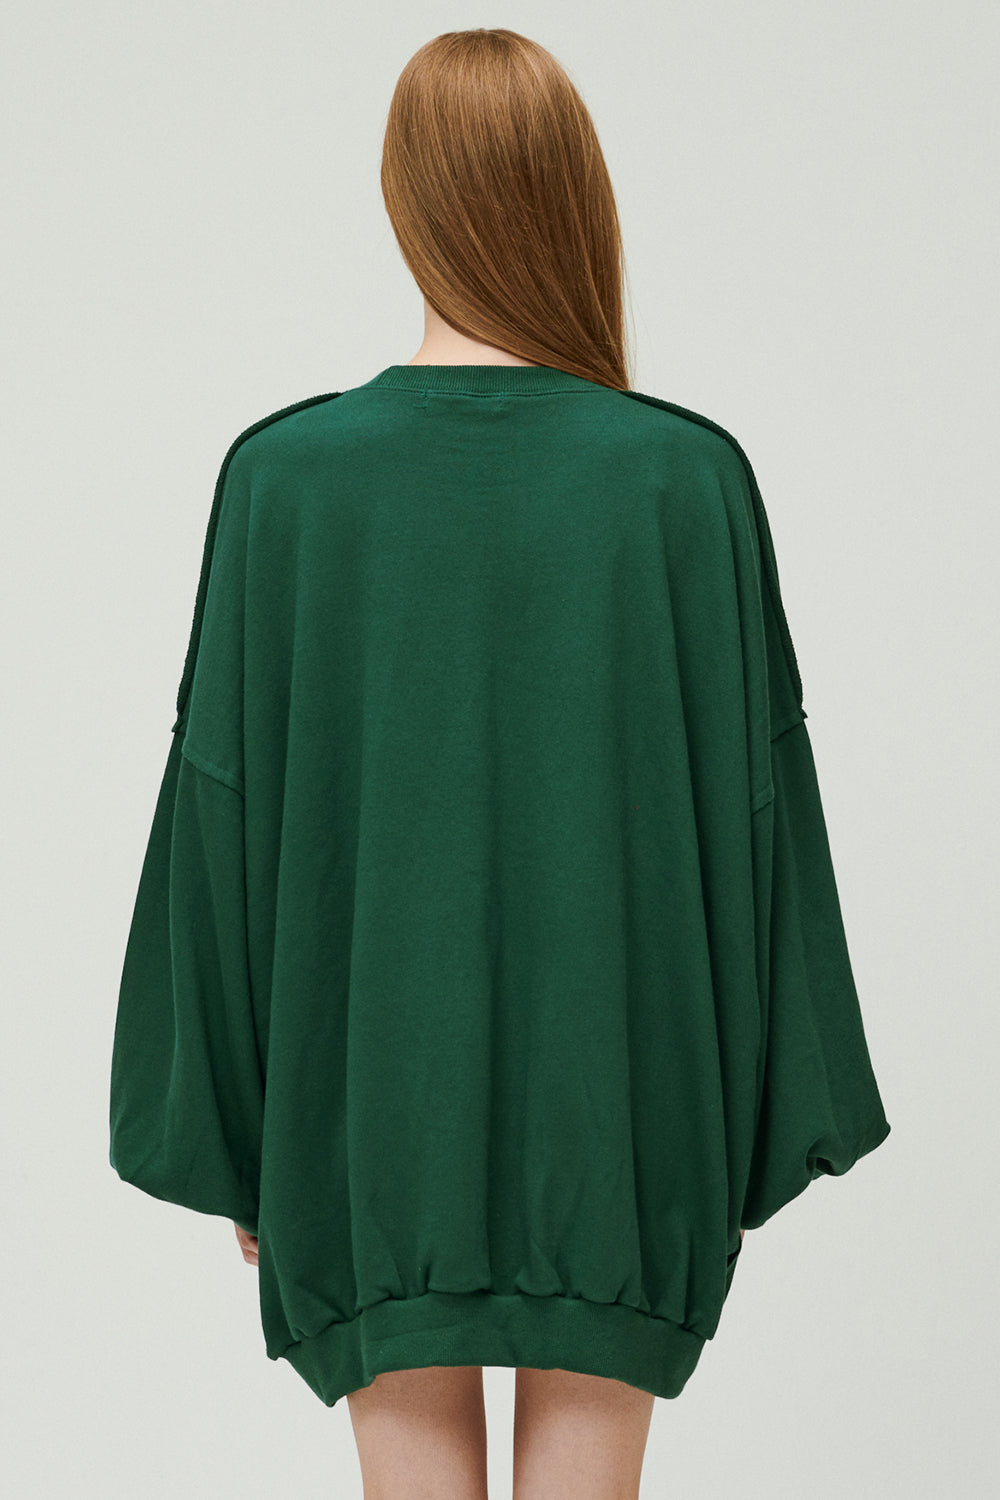 storets.com Lexi Oversized Sweatshirt/Dress